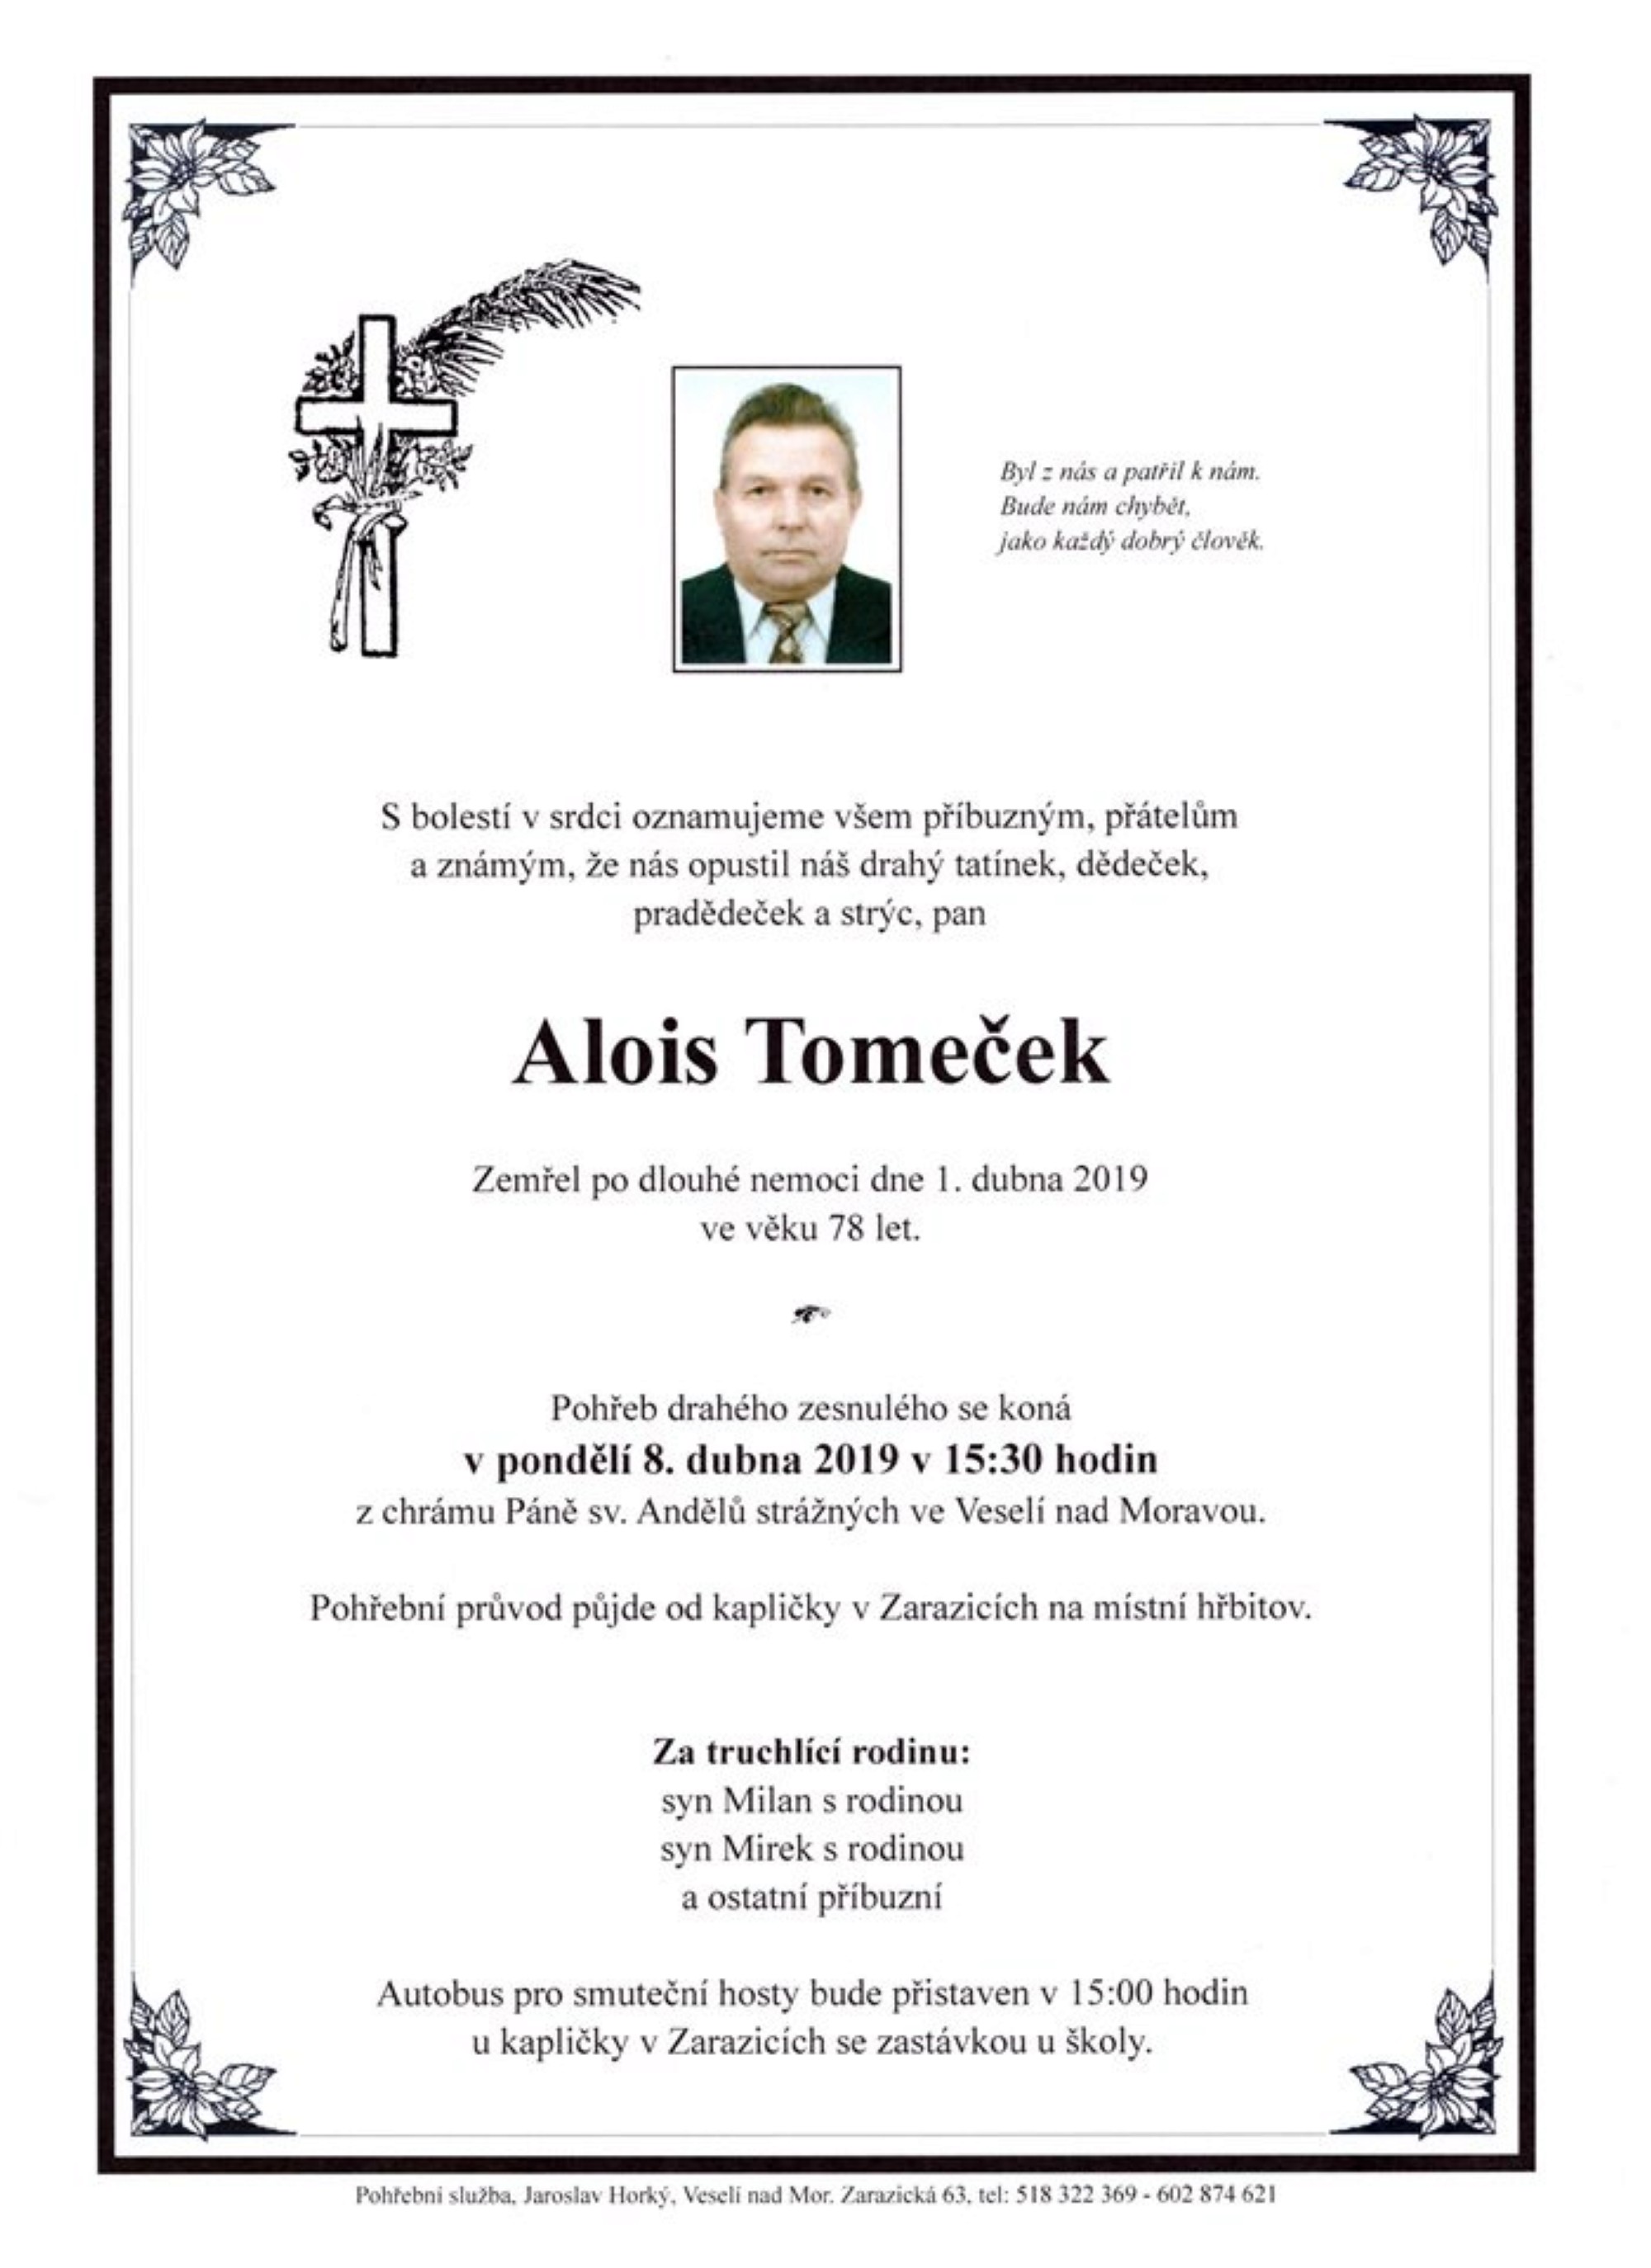 Alois Tomeček